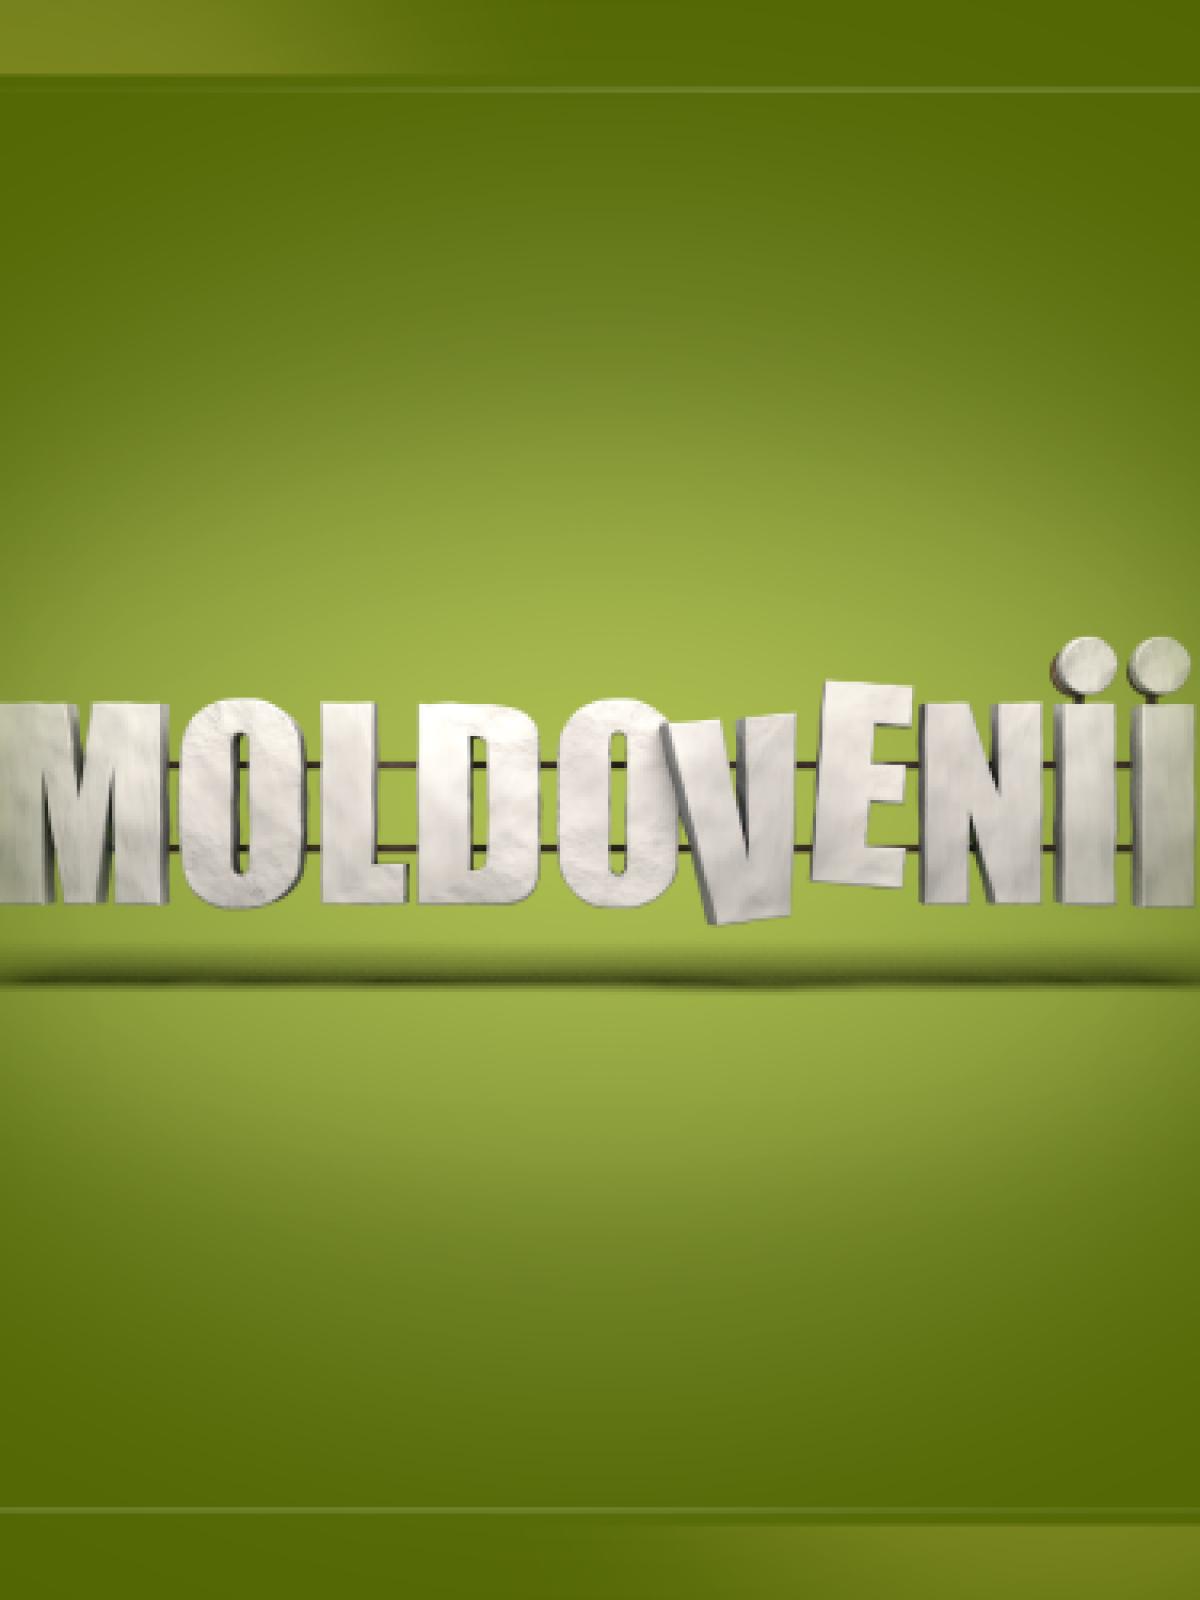 TV ratings for Moldovenii in Germany. Kanal D TV series